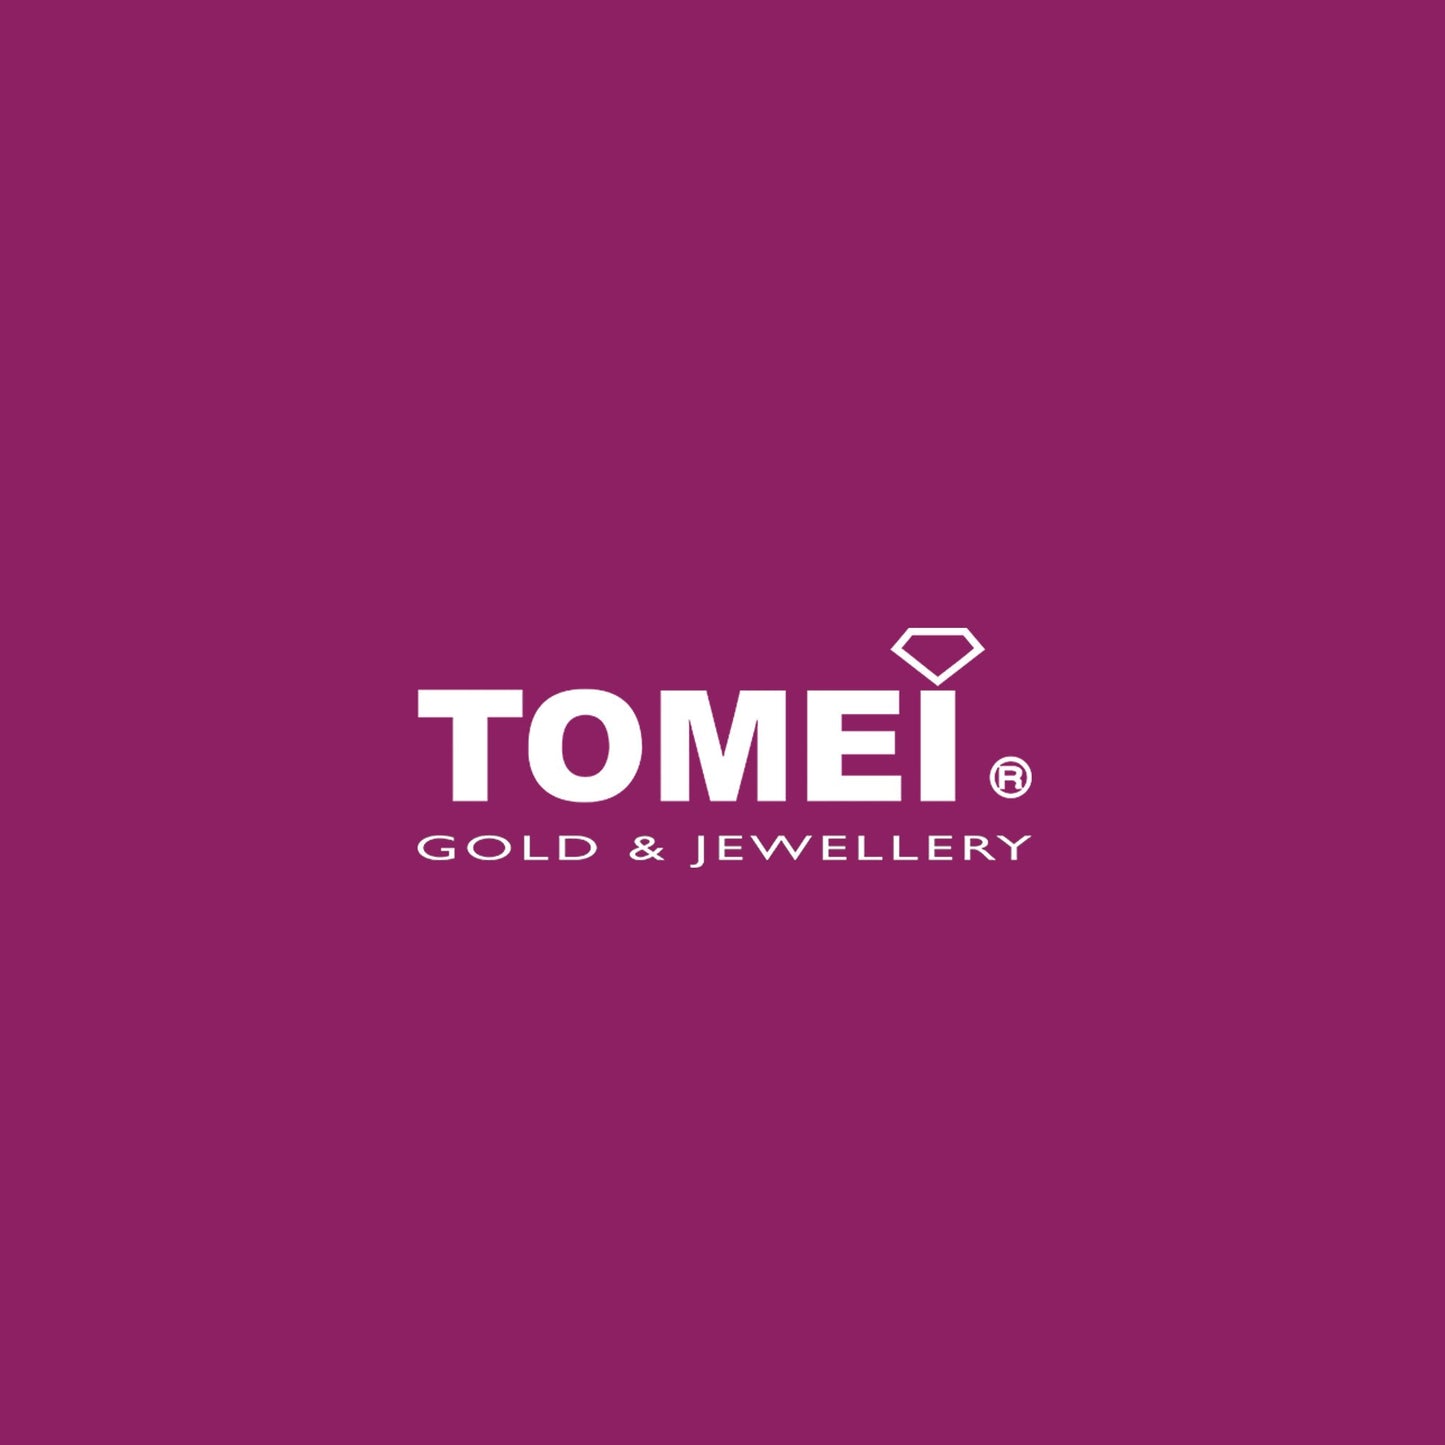 TOMEI Romantic Kiss Couple Rings, Yellow Gold 916 (XD-YG0354R/0355R-1C)